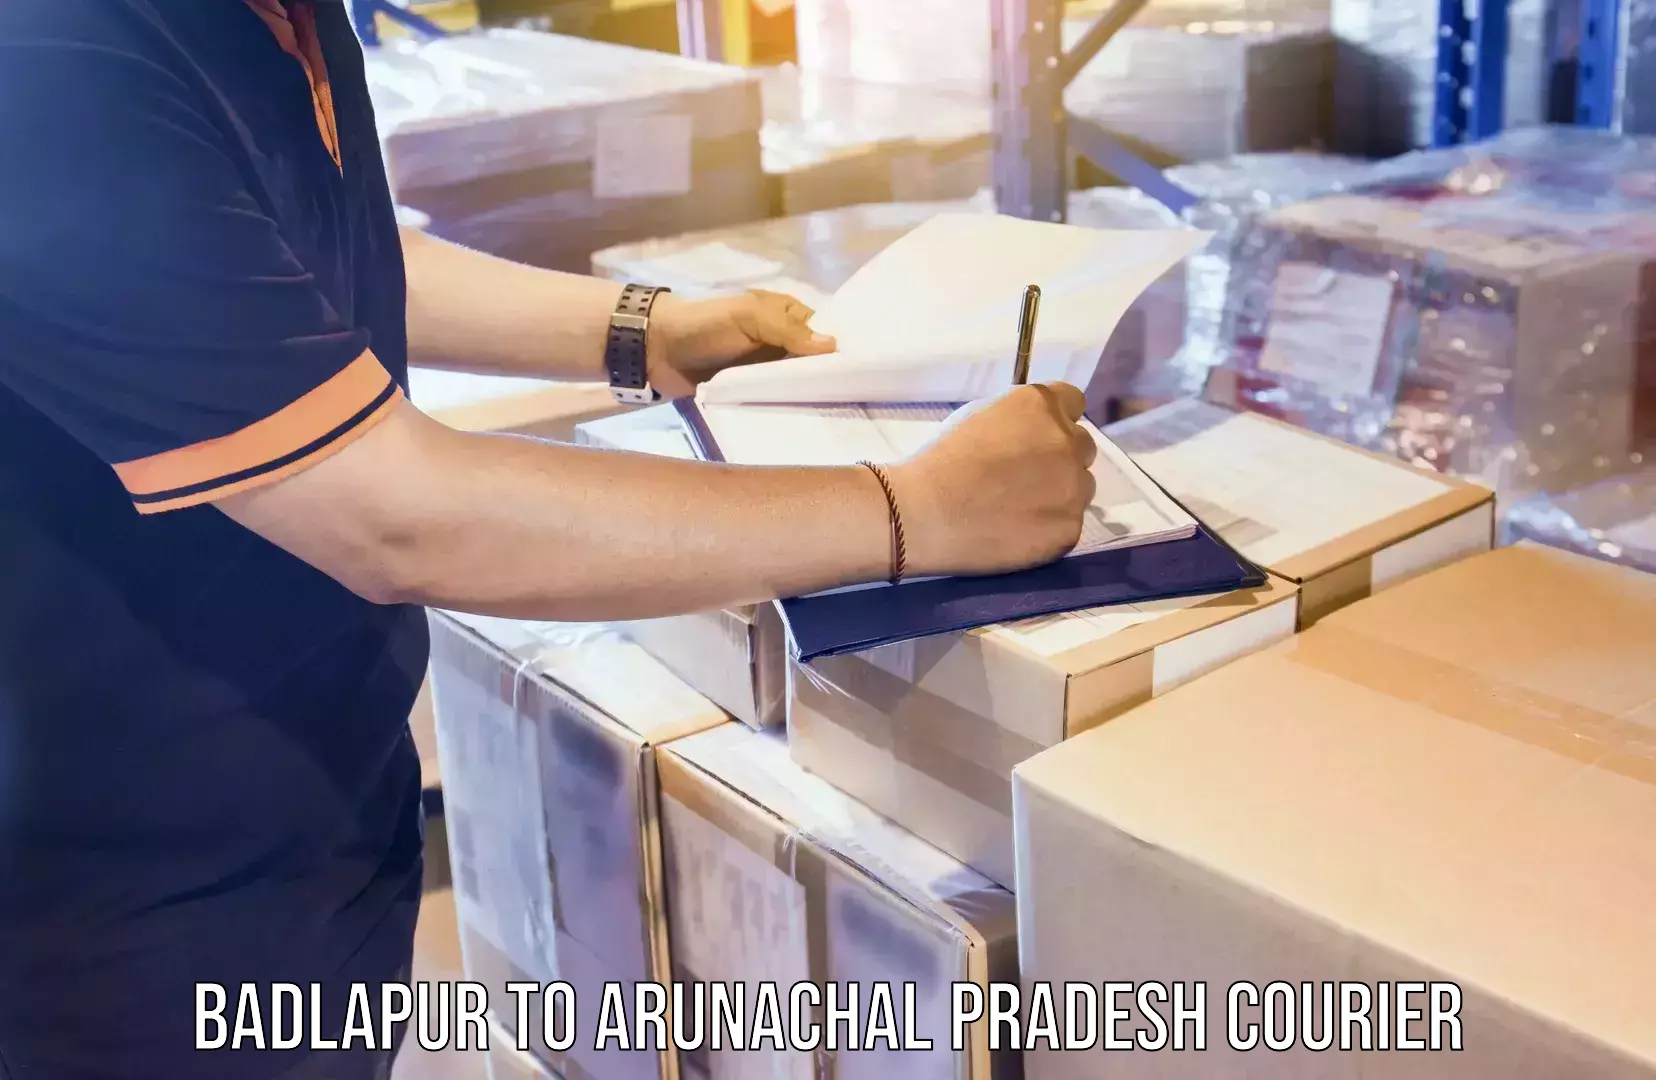 Global logistics network Badlapur to Arunachal Pradesh